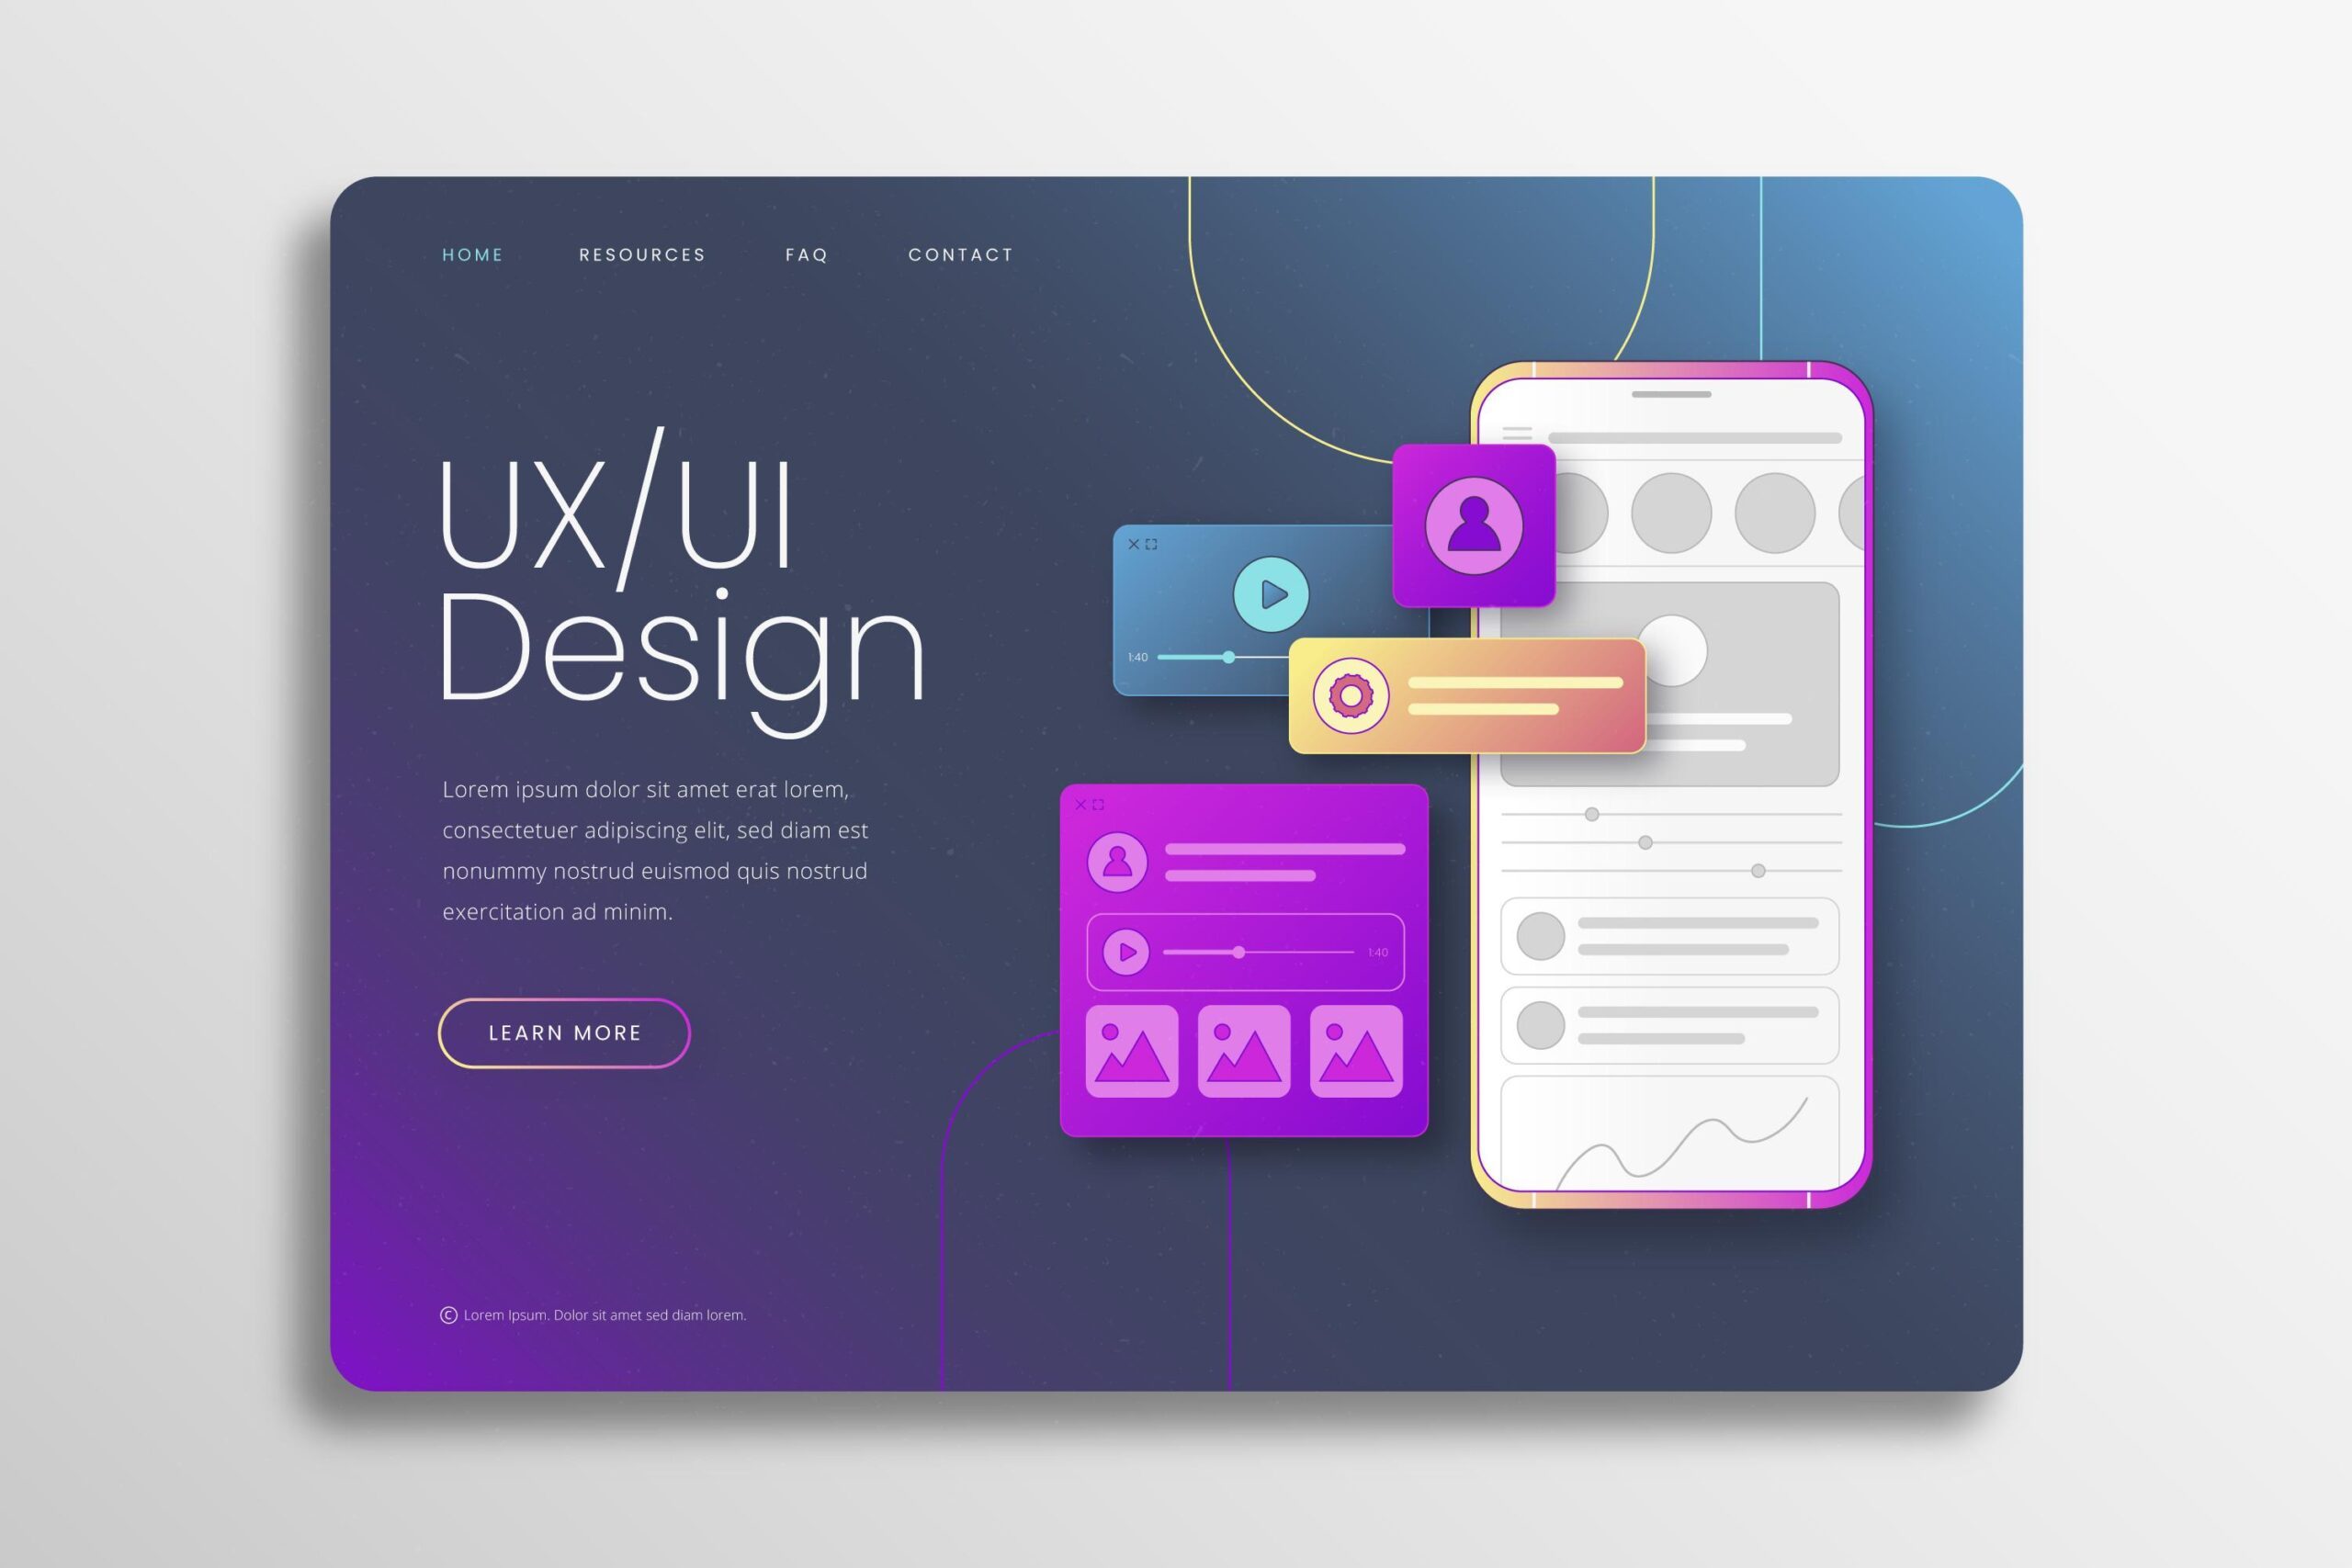 Creating Delightful User Experiences: The Art of UI Design